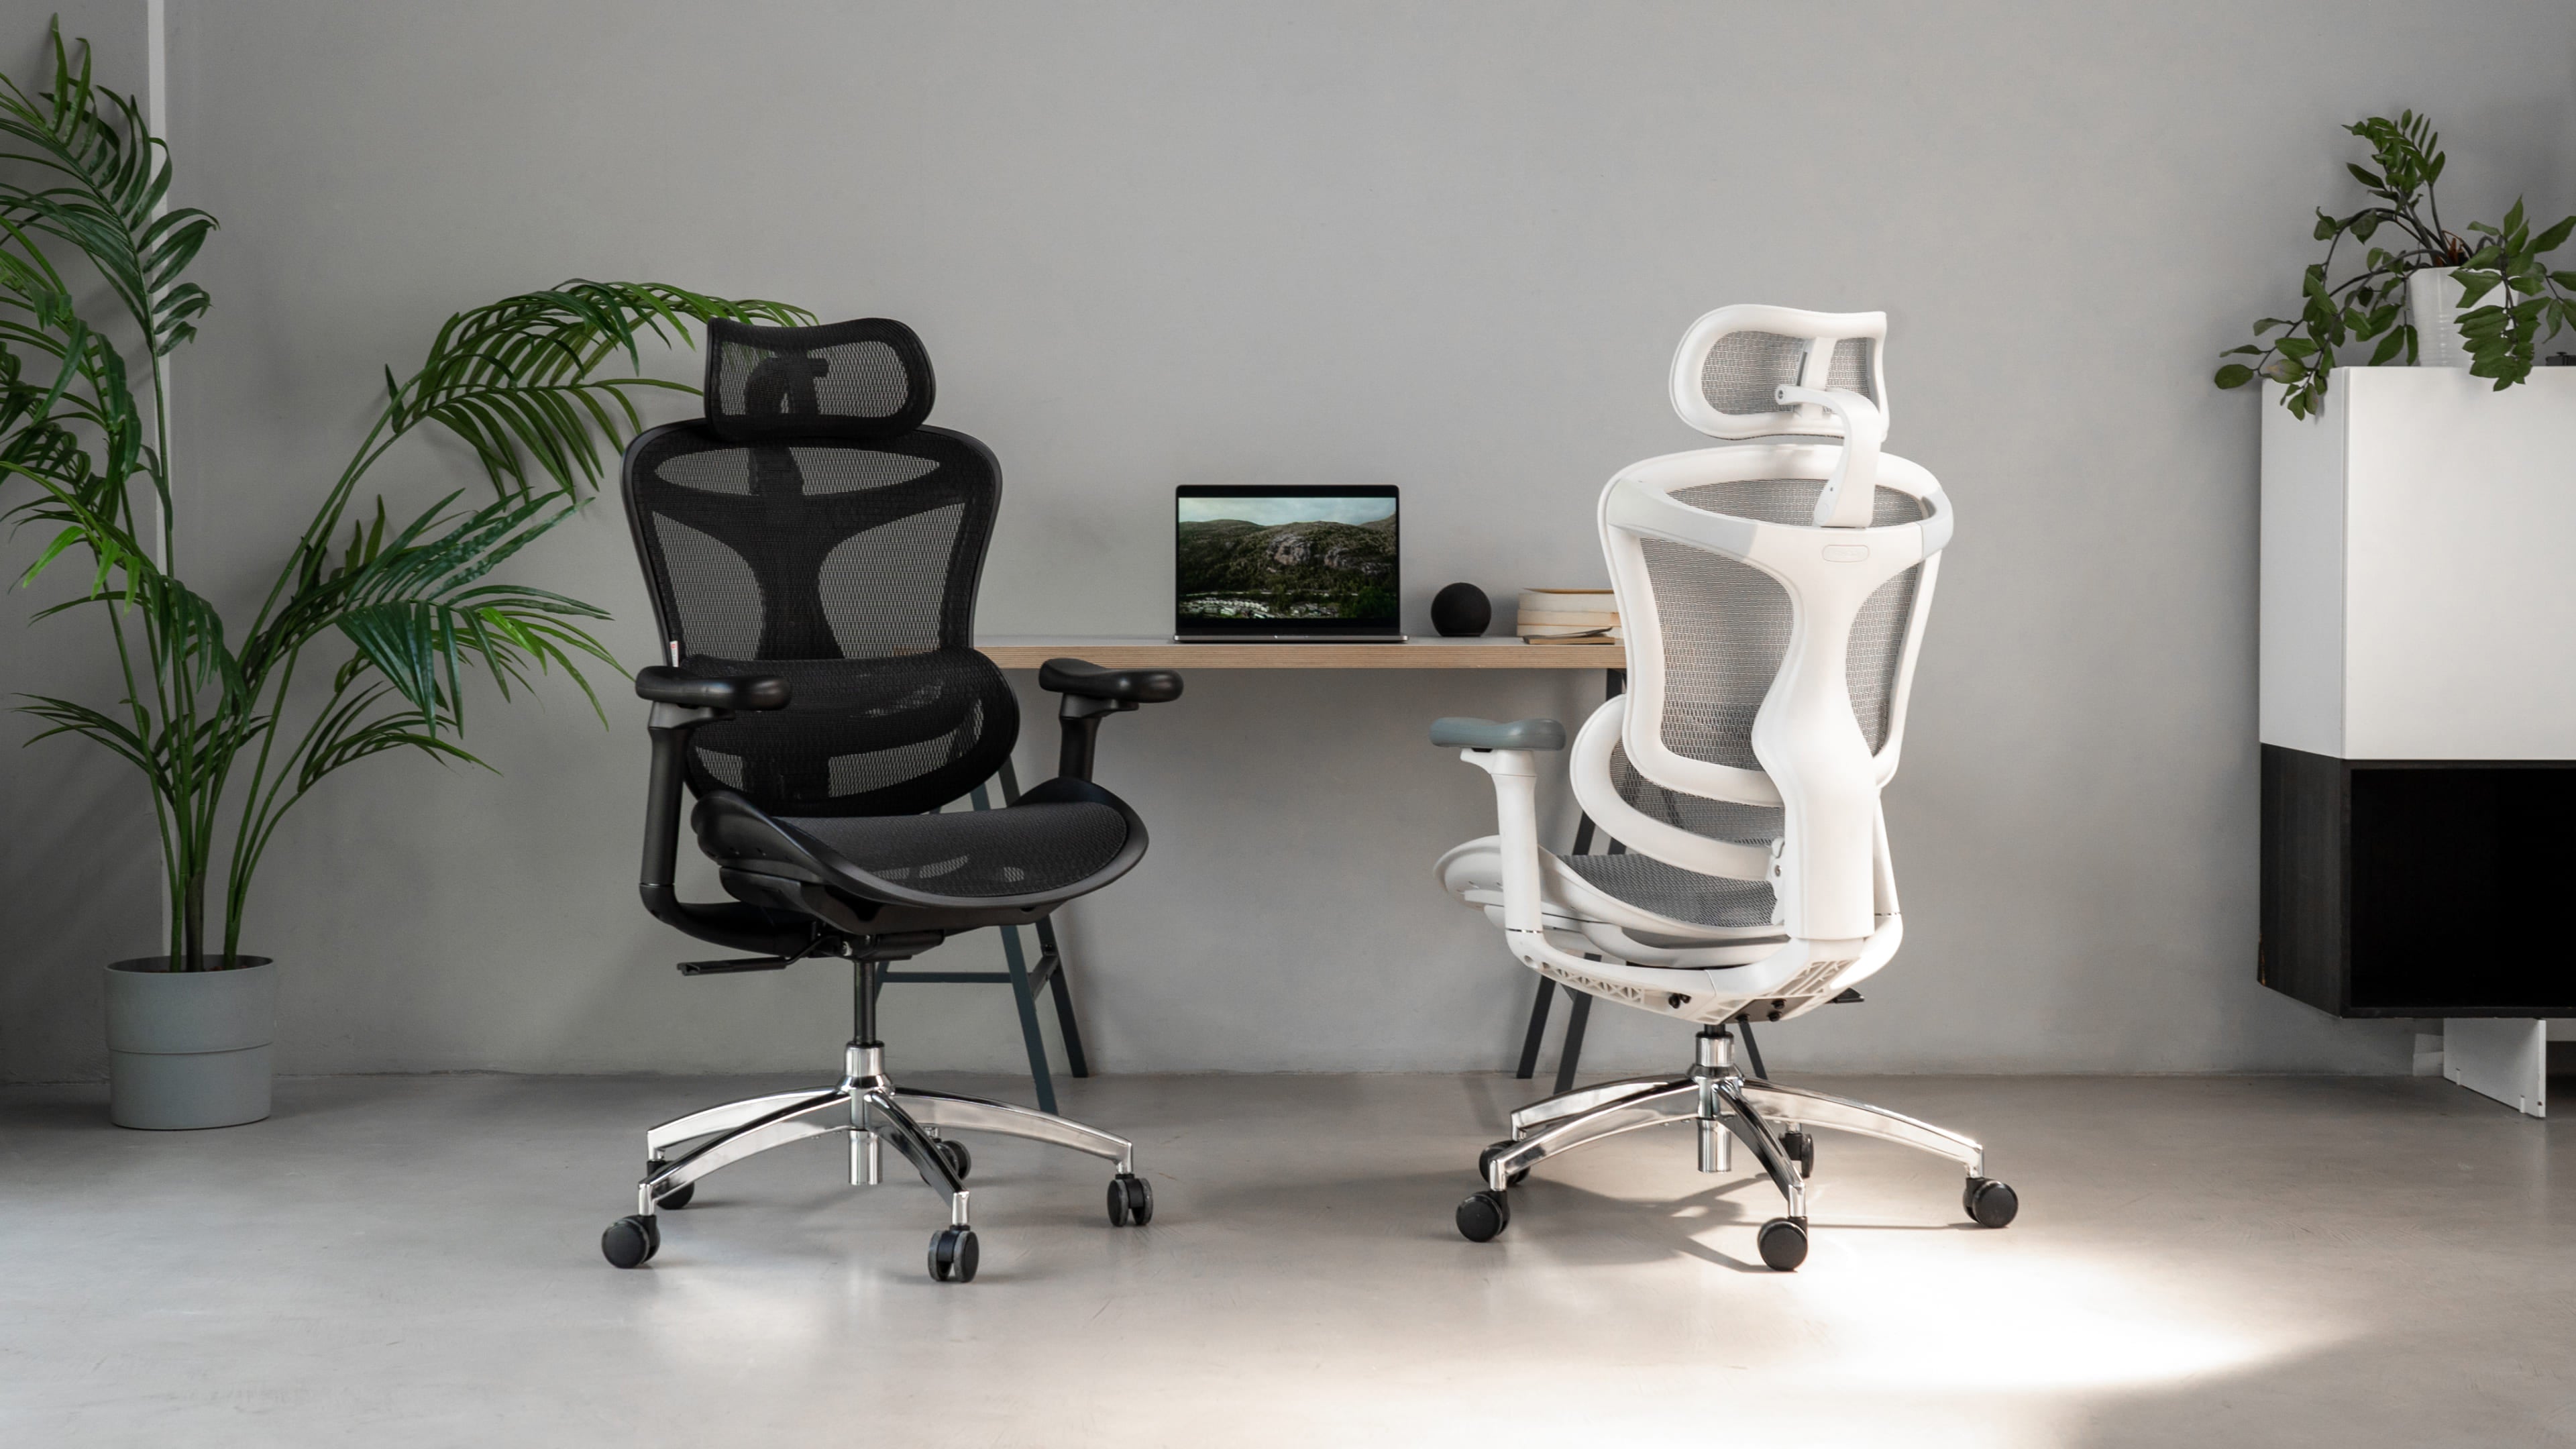 Sihoo chaise de bureau ergonomique - Cdiscount